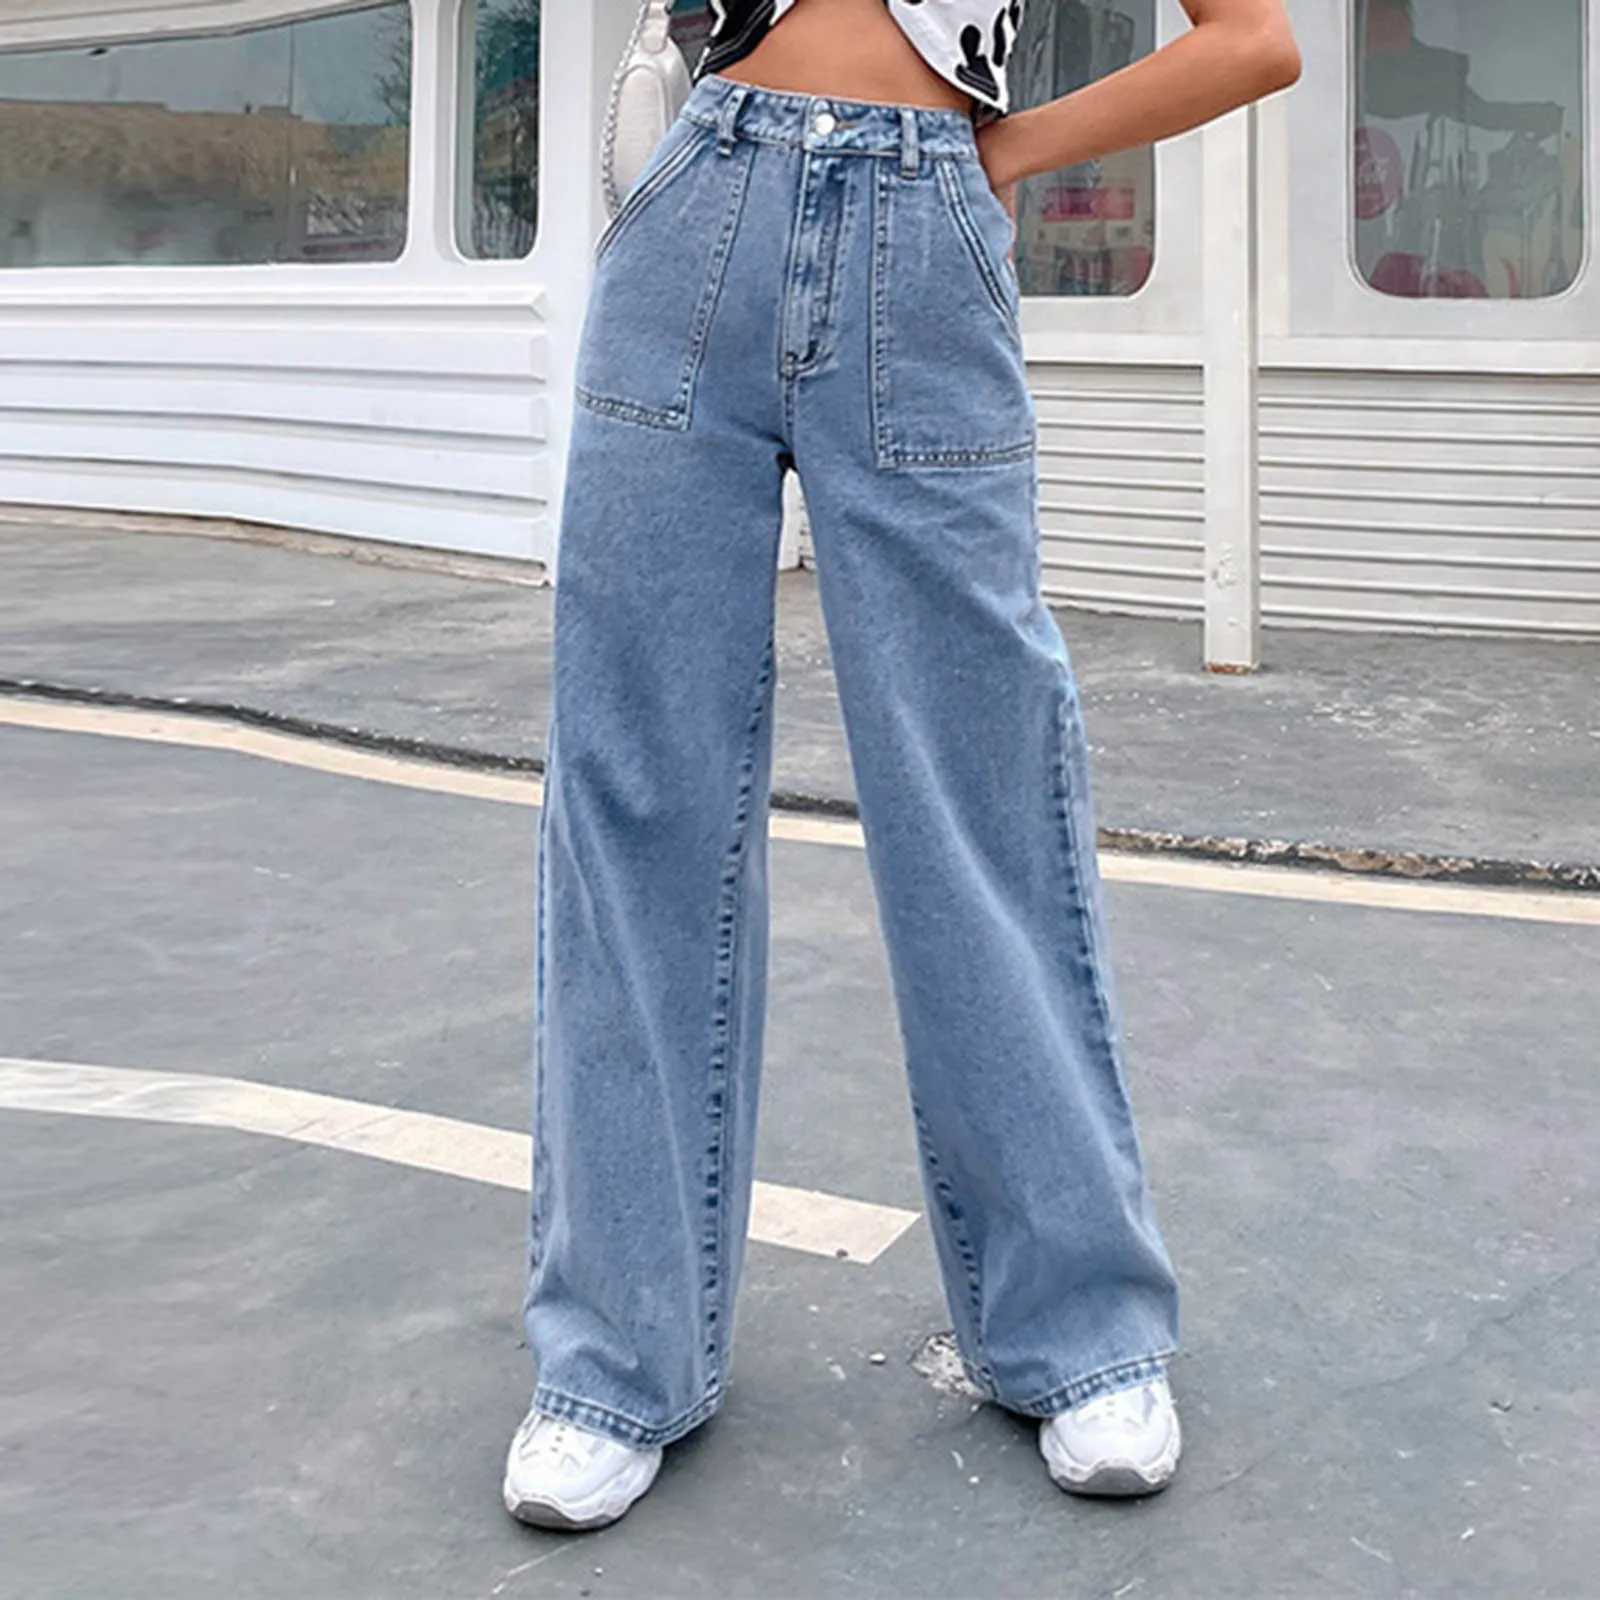 Fashion Jeans Women's Casual Pocket High Waist Zipper Jeans Loose Pants Korean-style Pants